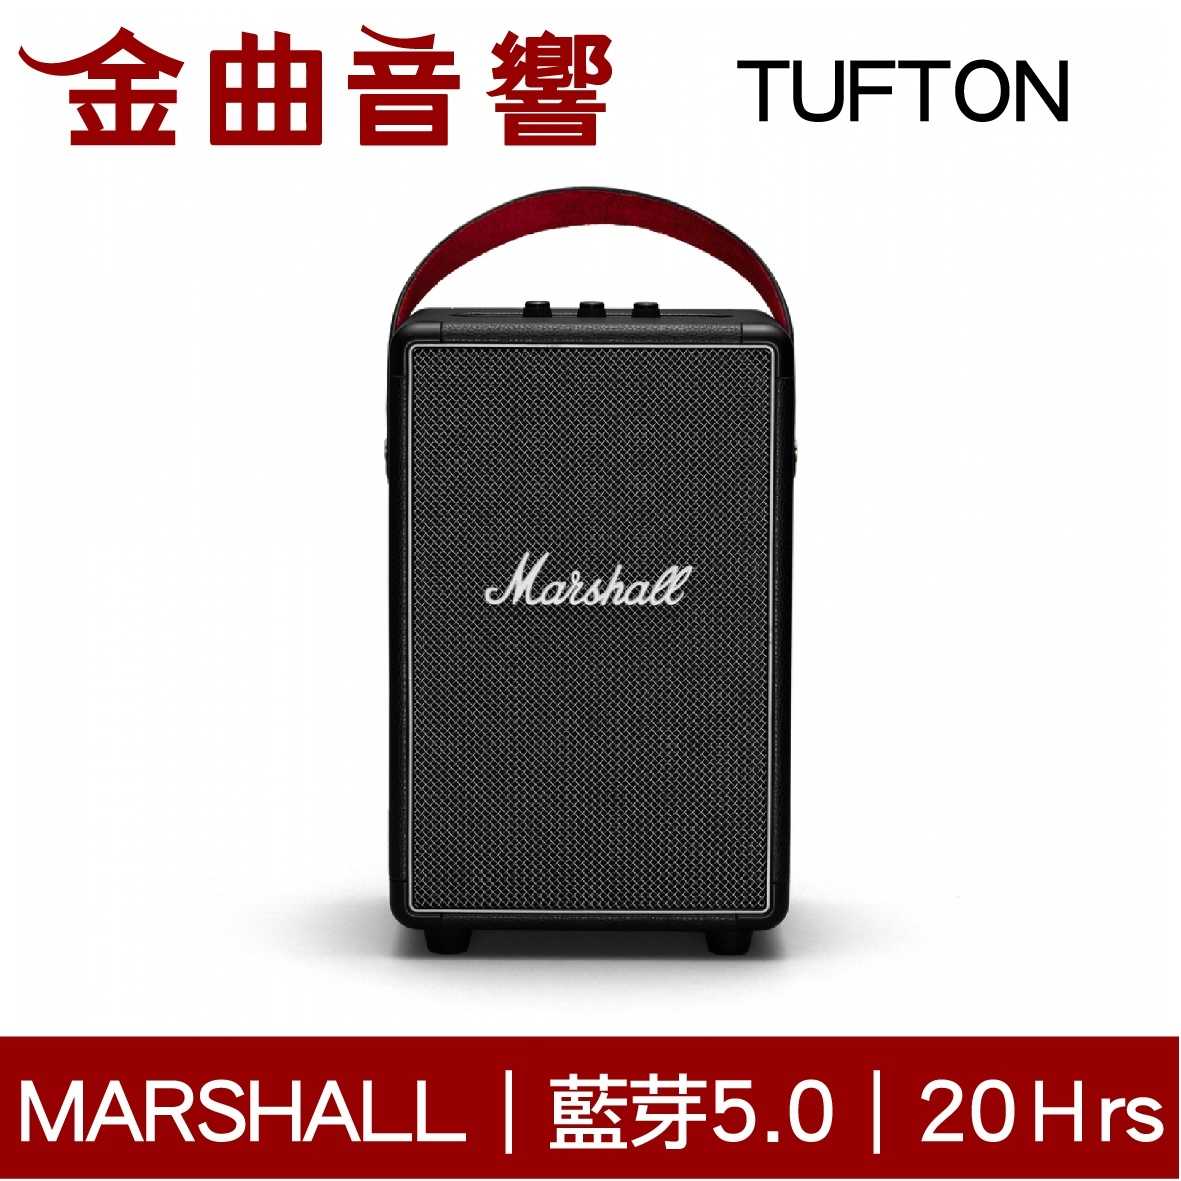 Marshall Tufton 攜帶式喇叭 藍芽 | 金曲音響